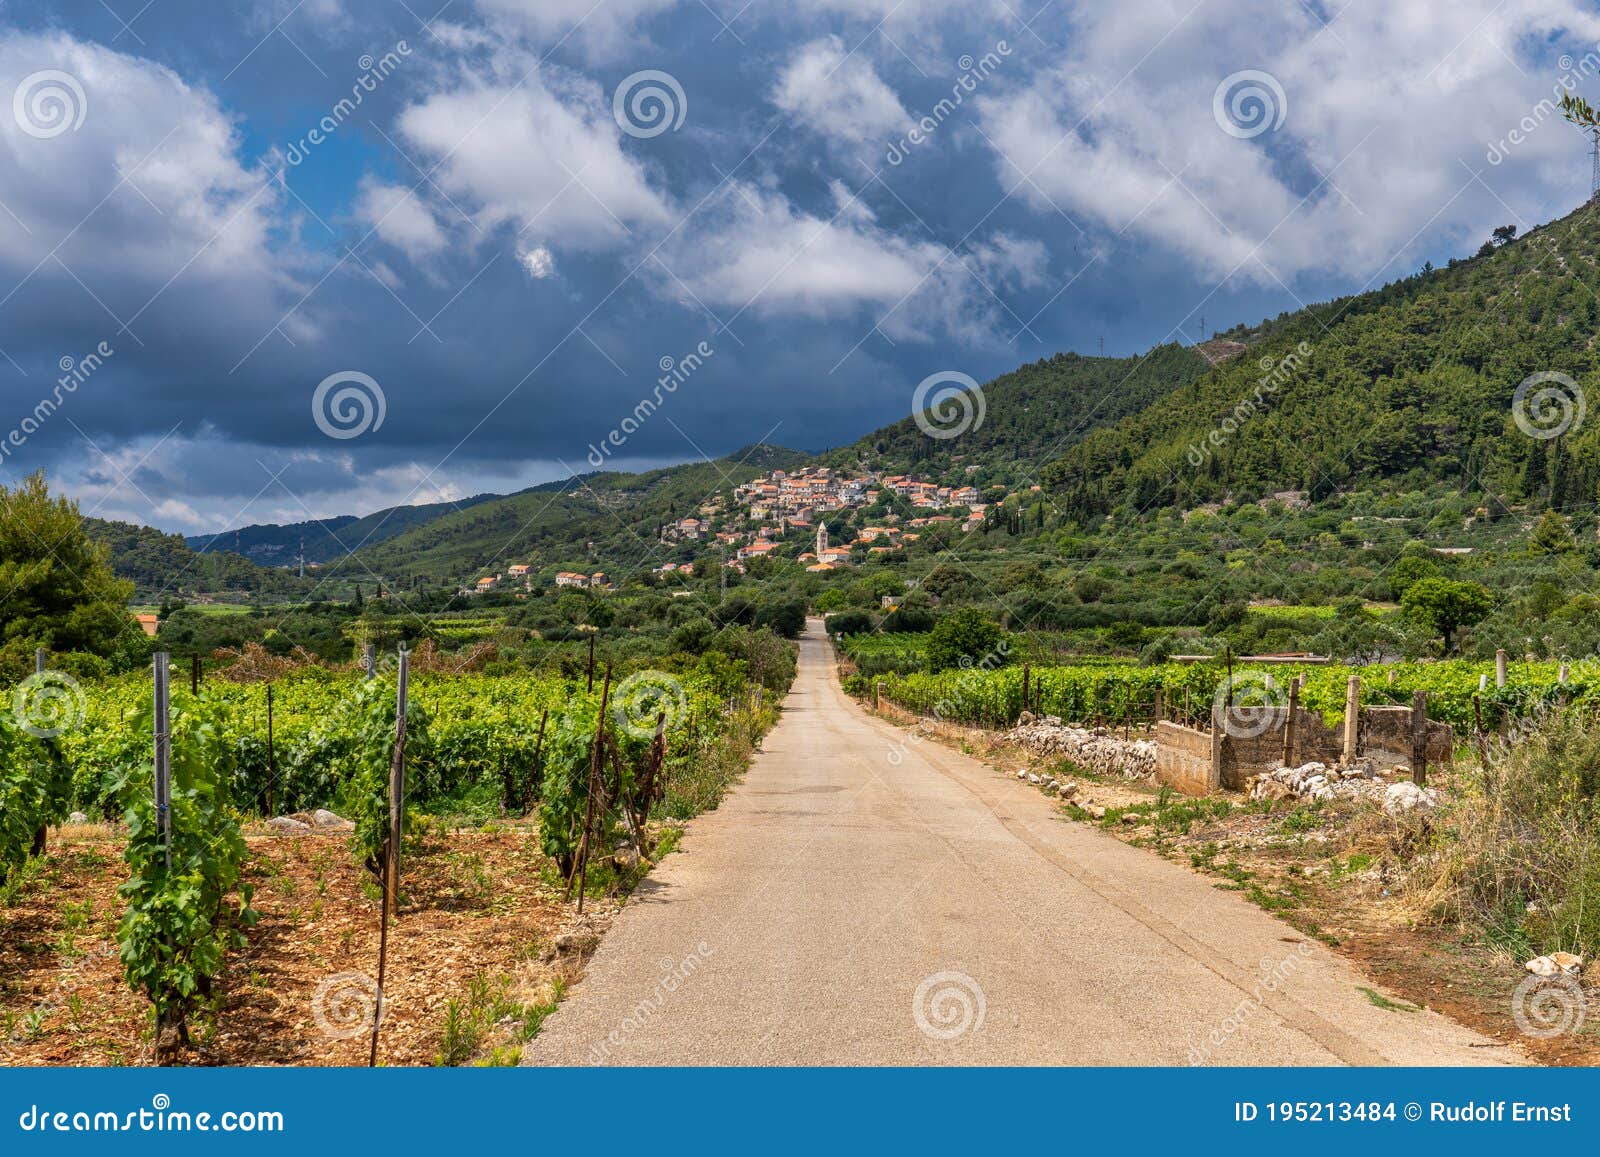 village of cara in green island landscape, korcula island in dalmatia, croatia